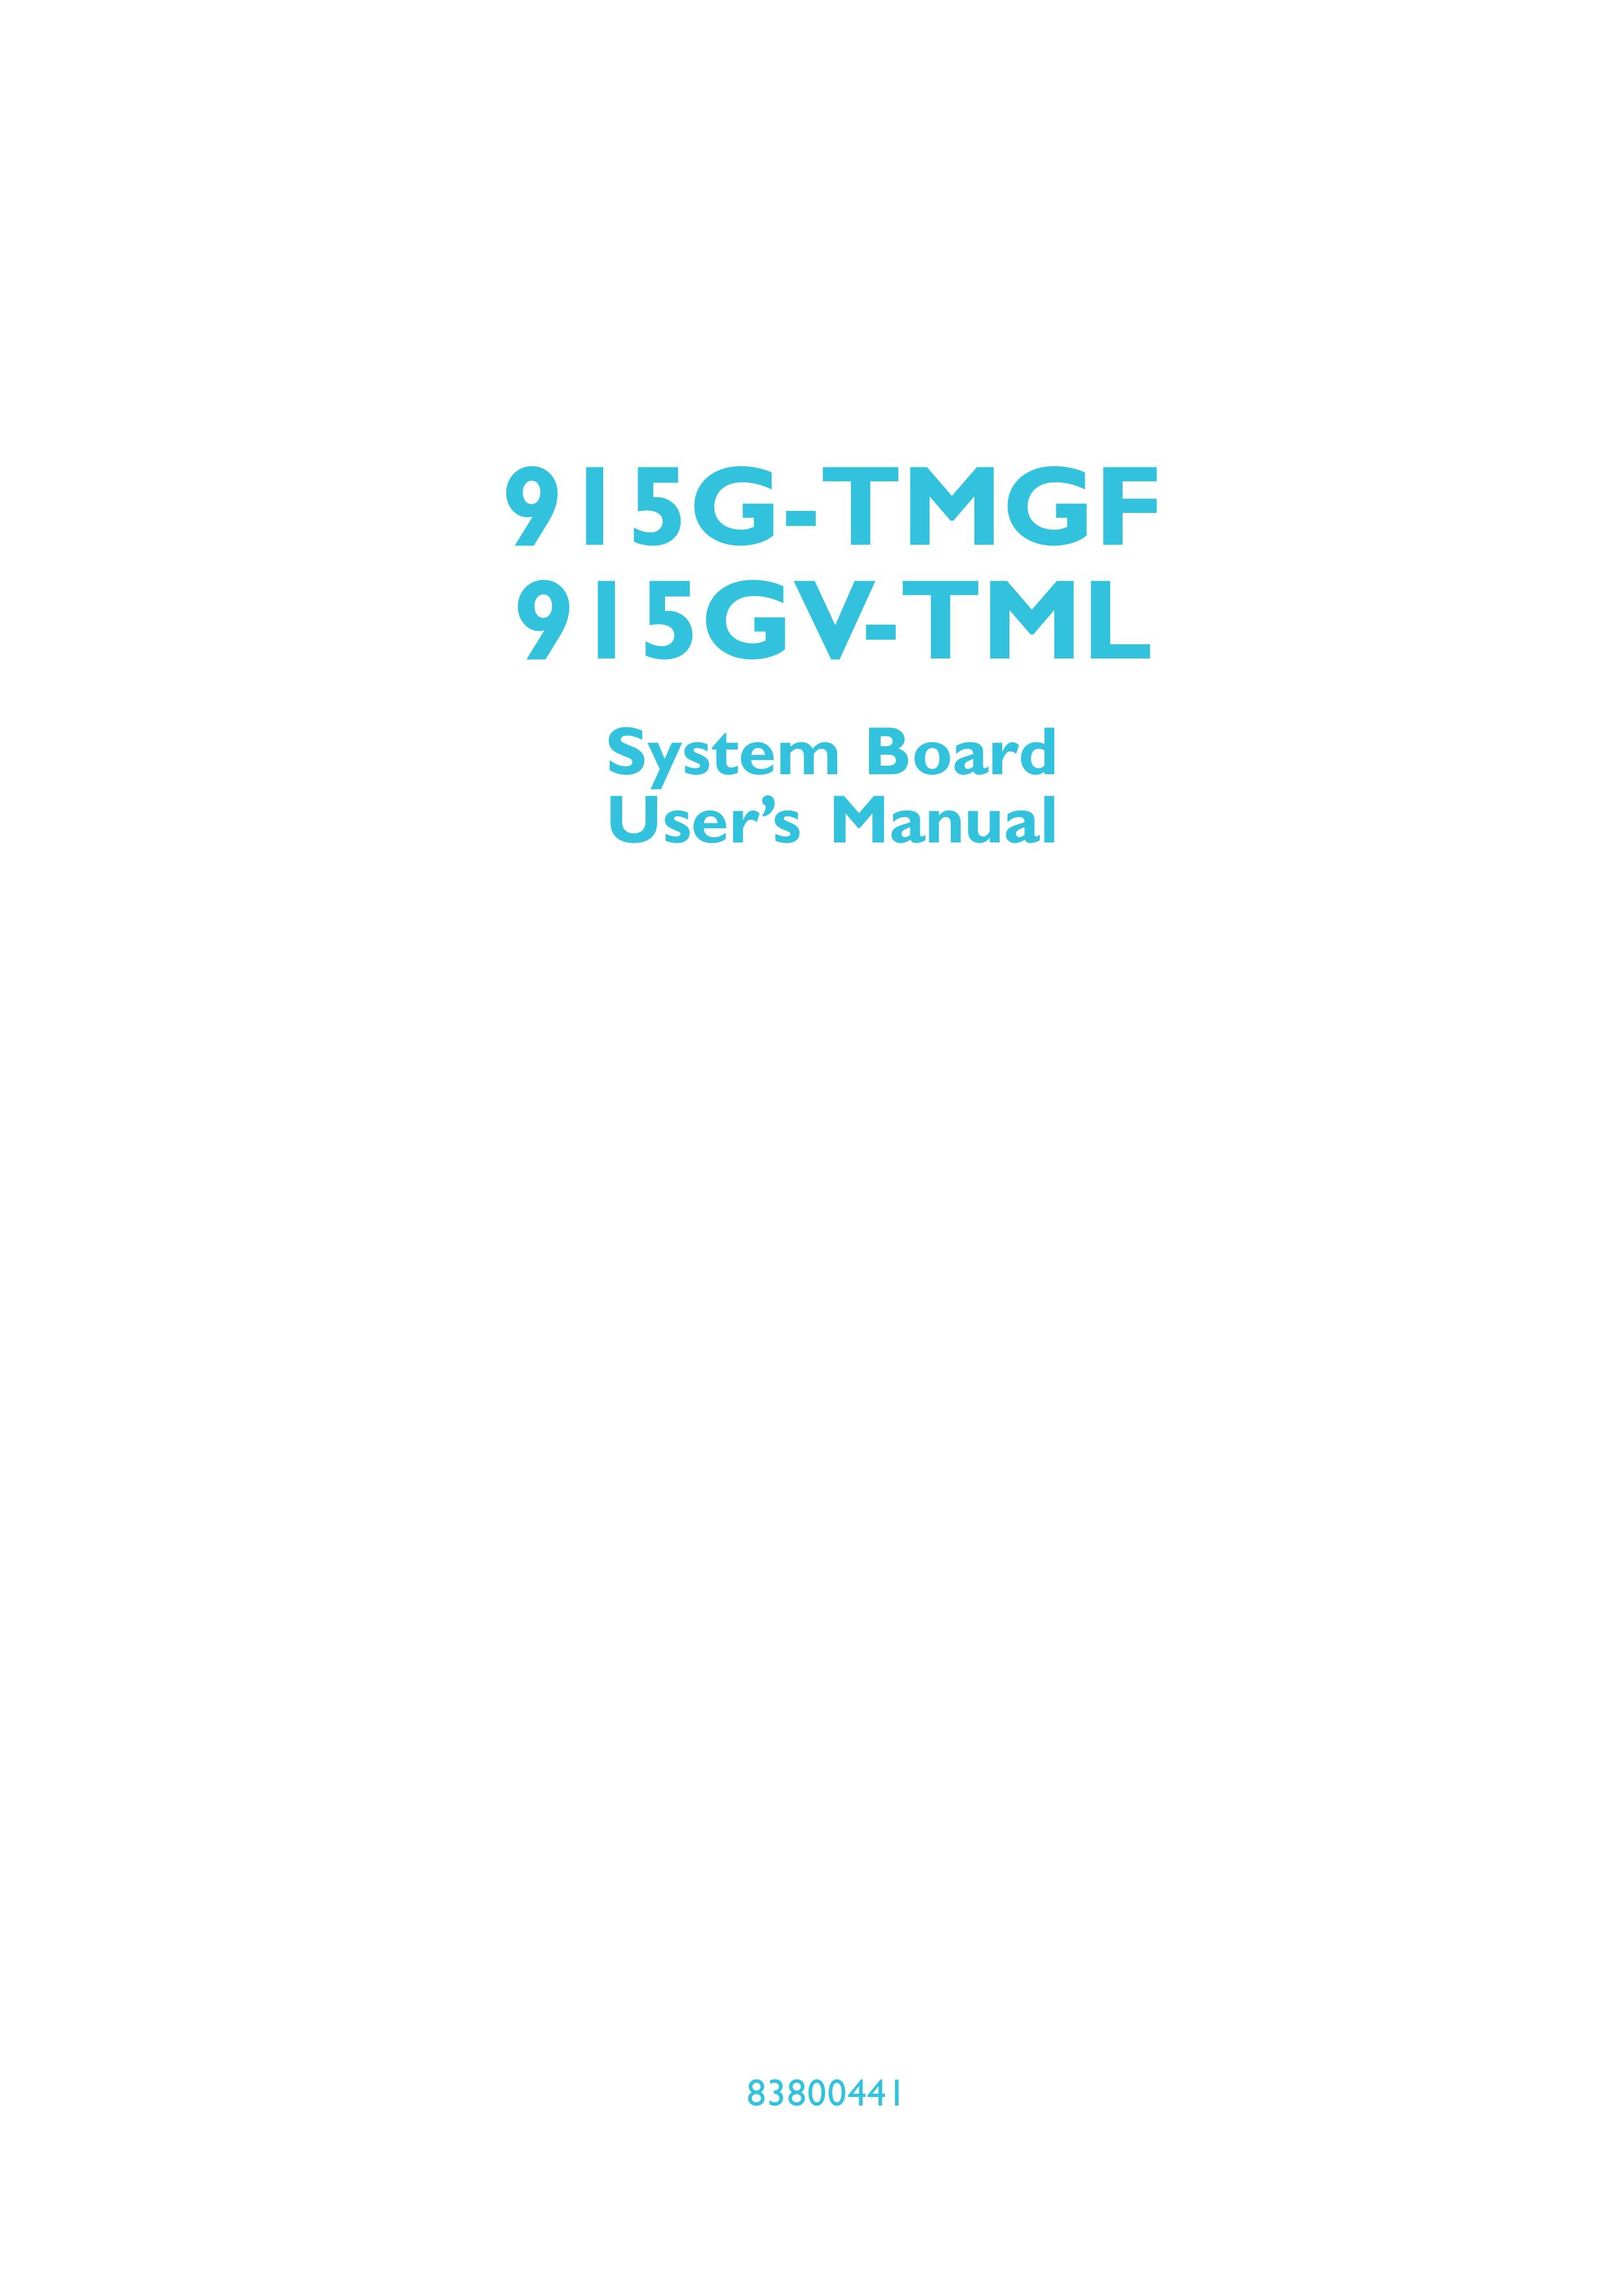 DFI 915g-tmgf Computer Hardware User Manual